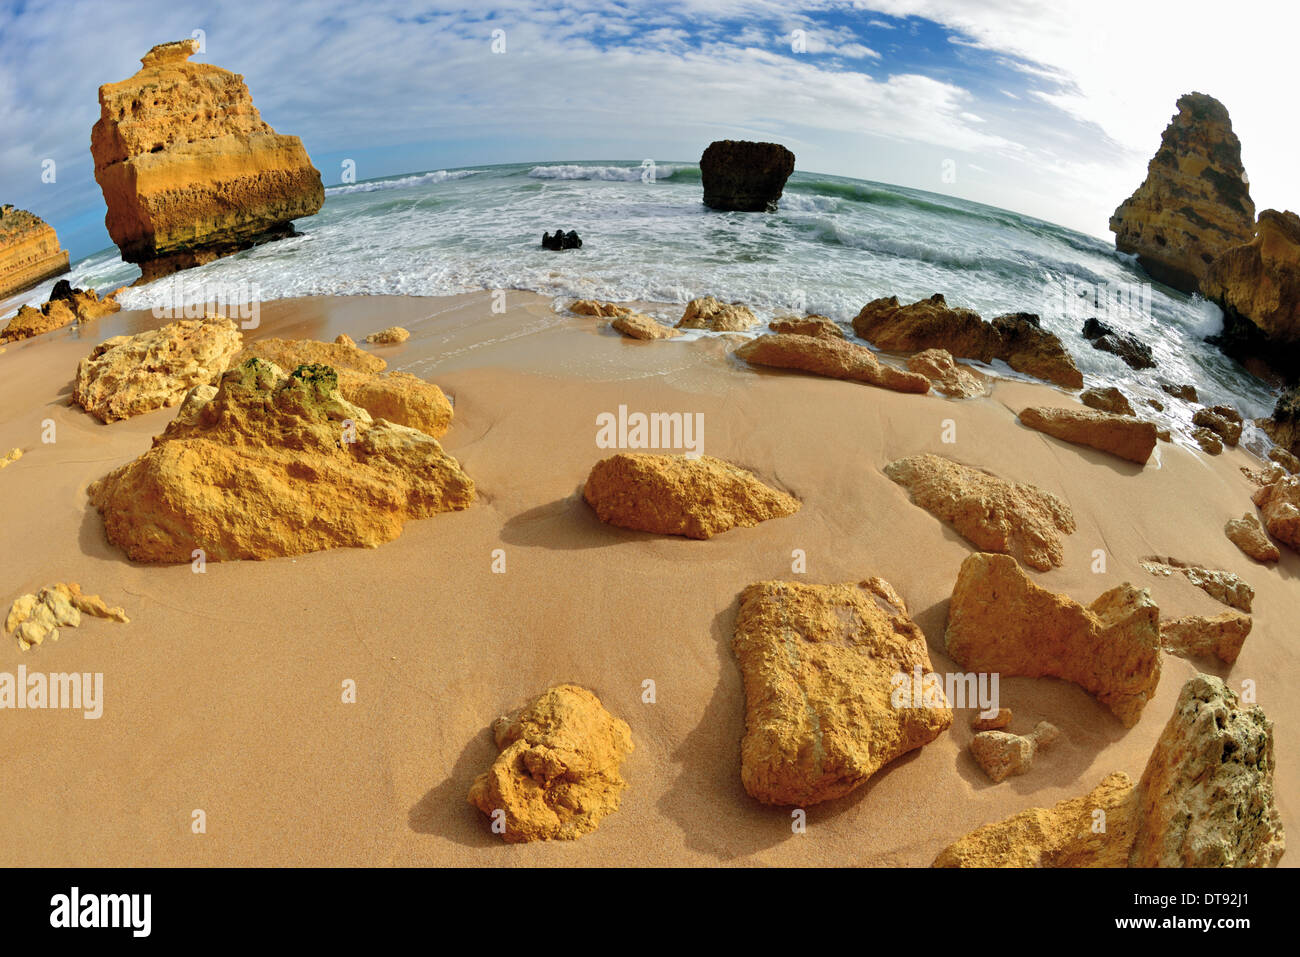 Portugal, Algarve: Rocks and waves at beach Praia da Marinha seen with fisheye perspective Stock Photo